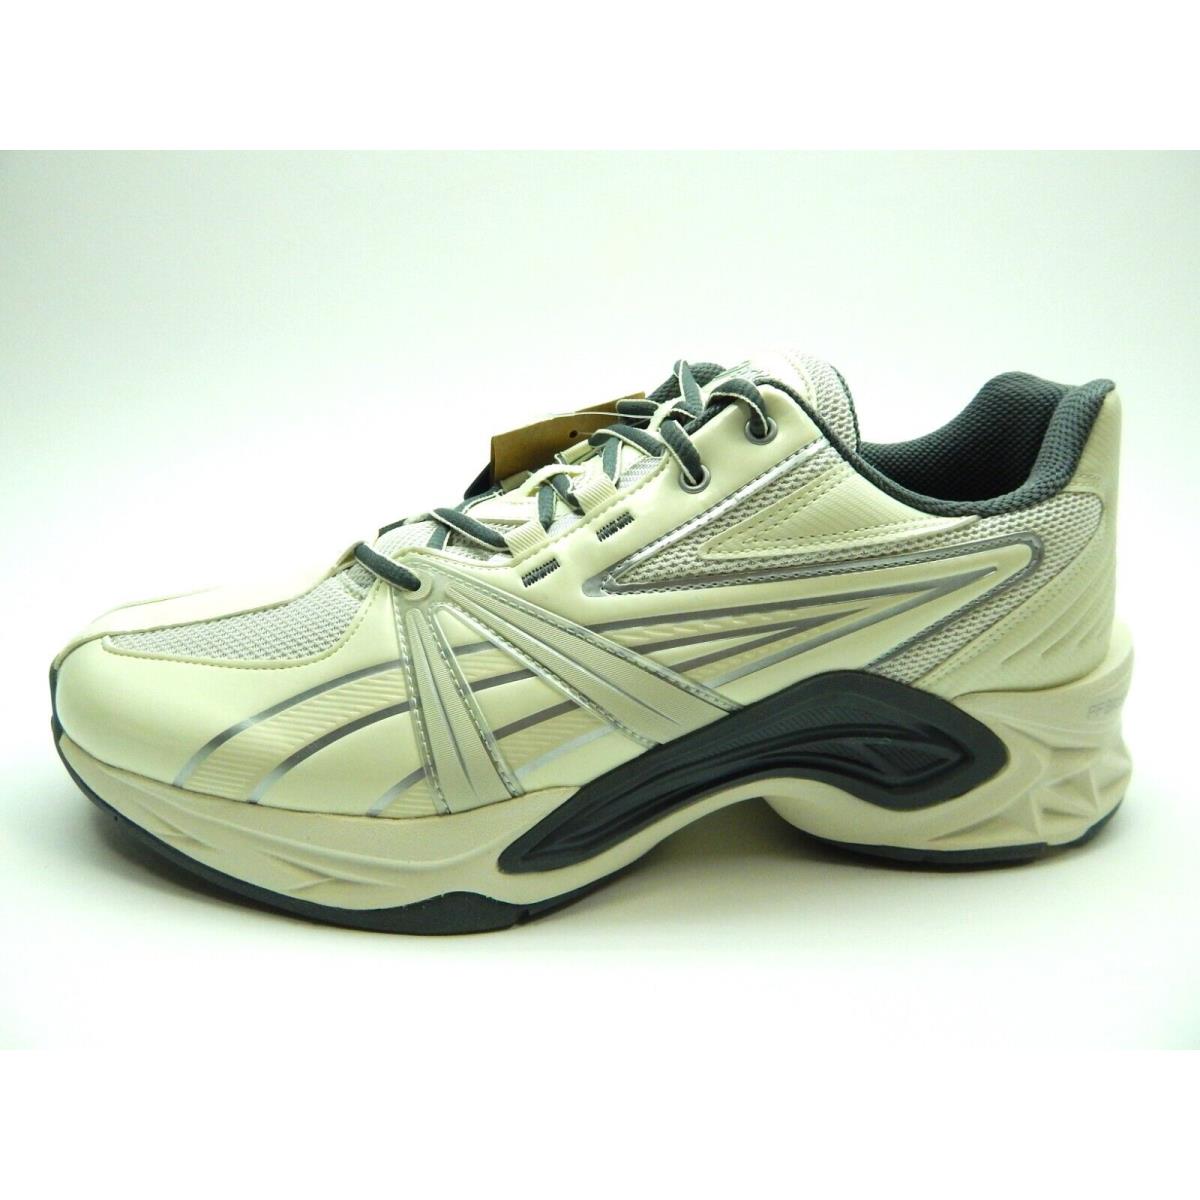 Asics Protoblast Ivory Cream 1201A380-750 Men Shoes Size 7.5